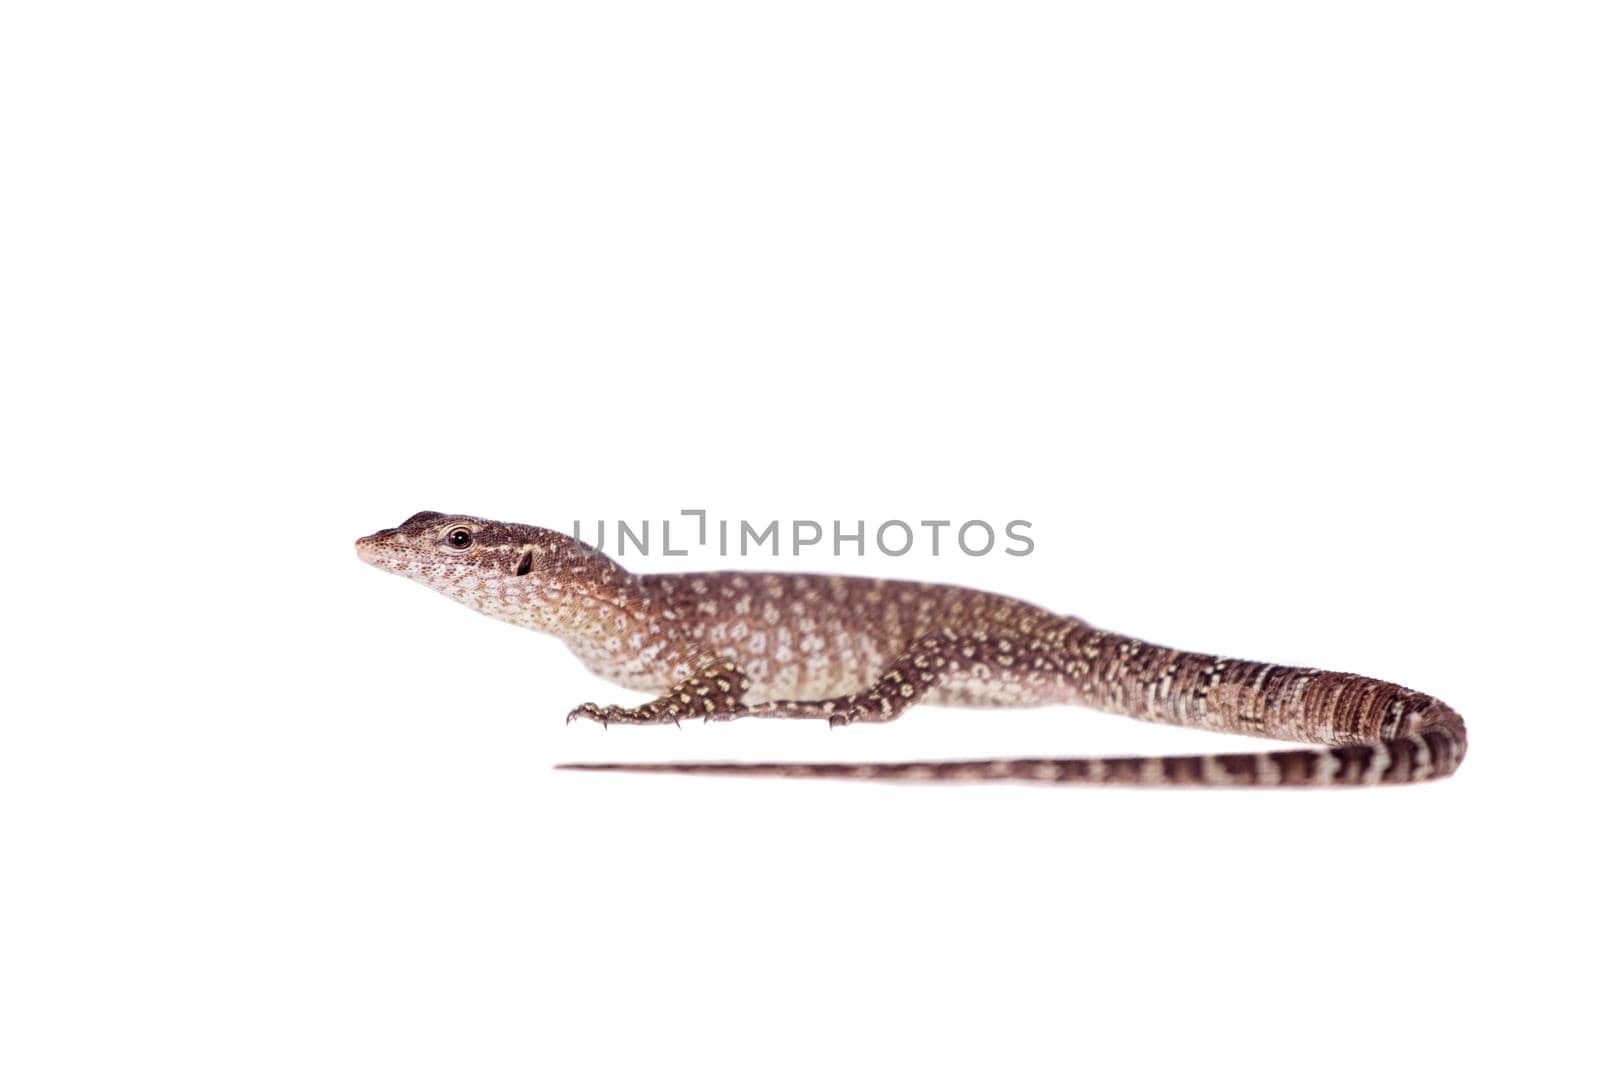 Asian Water Monitor Lizard, Varanus salvator, on white by RosaJay